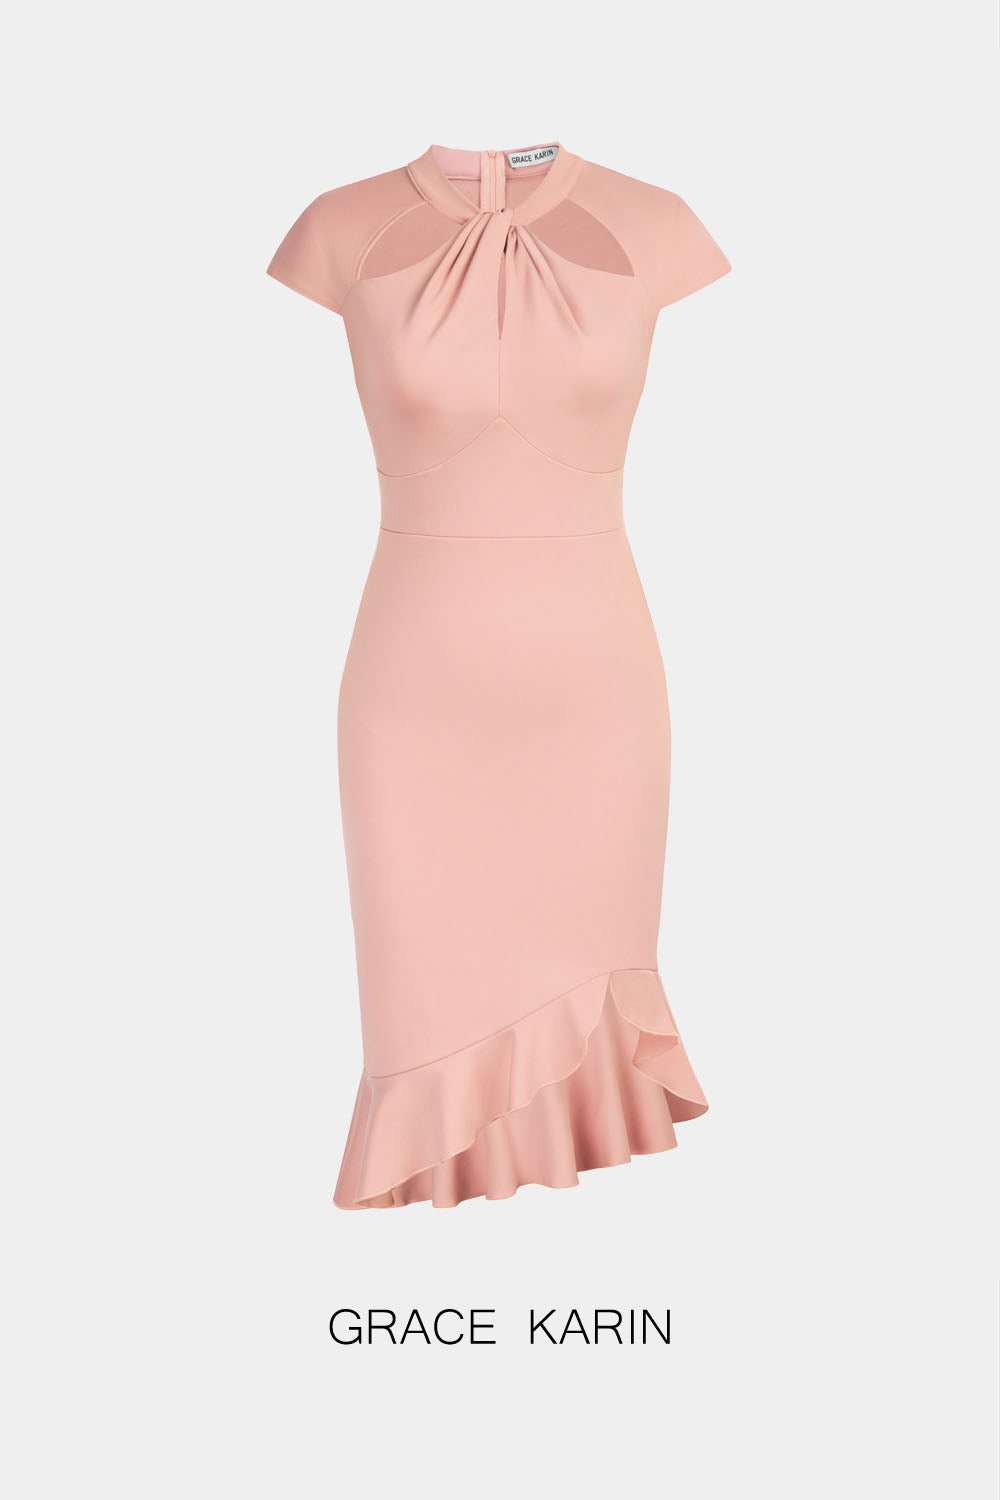 【$19.99 Flash Sale!】GRACE KARIN Irregular Mermaid Hem Hollowed-out Bodycon Dress